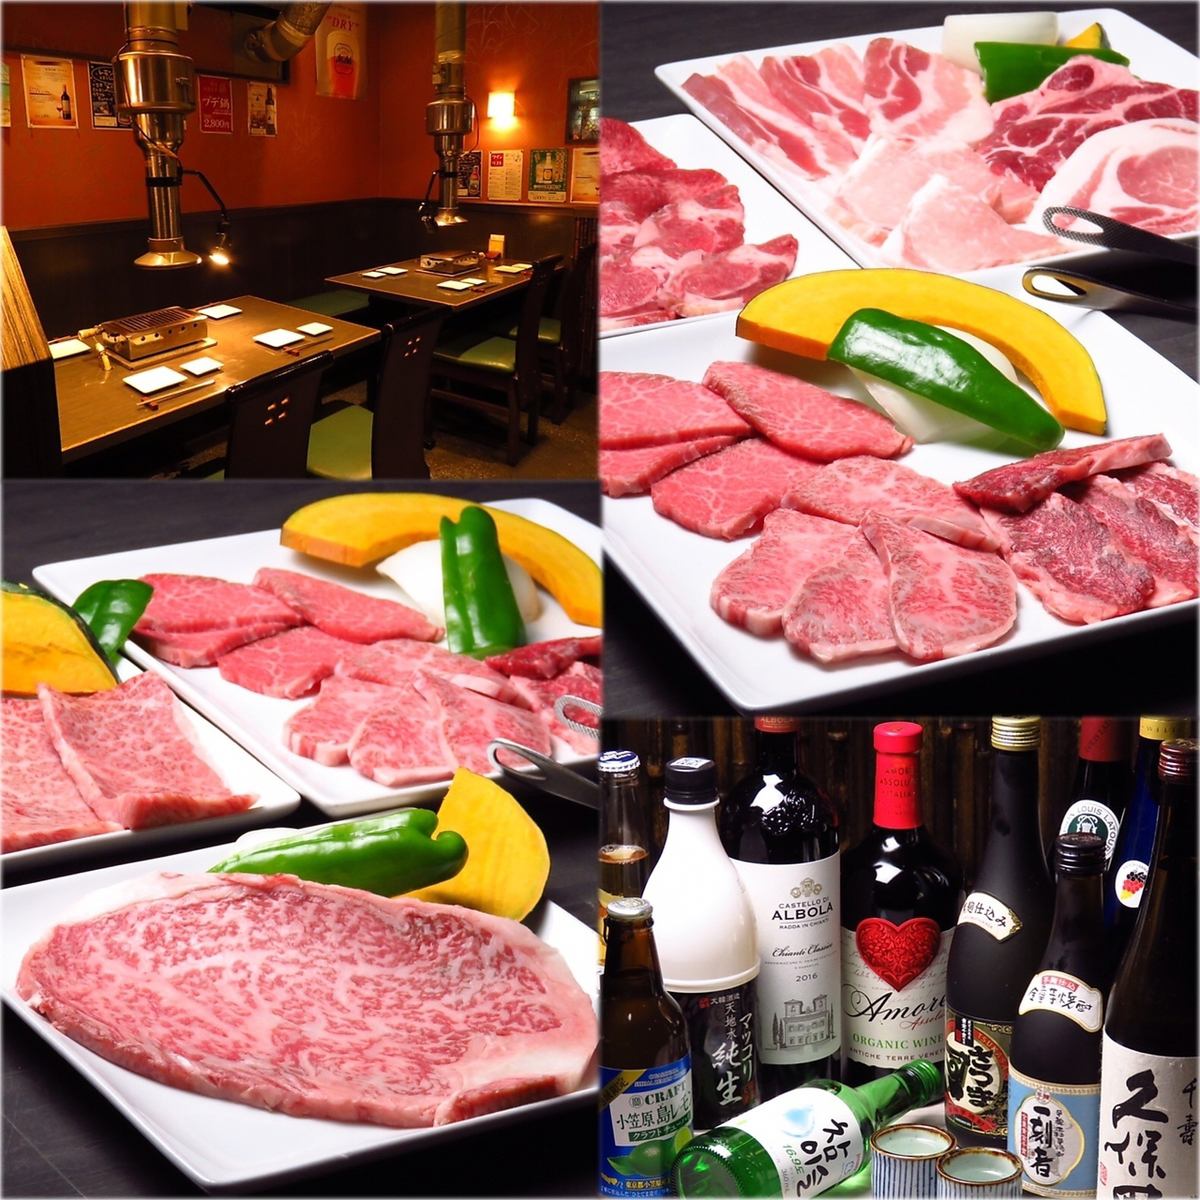 Enjoy A5 Kobe beef at a low price!